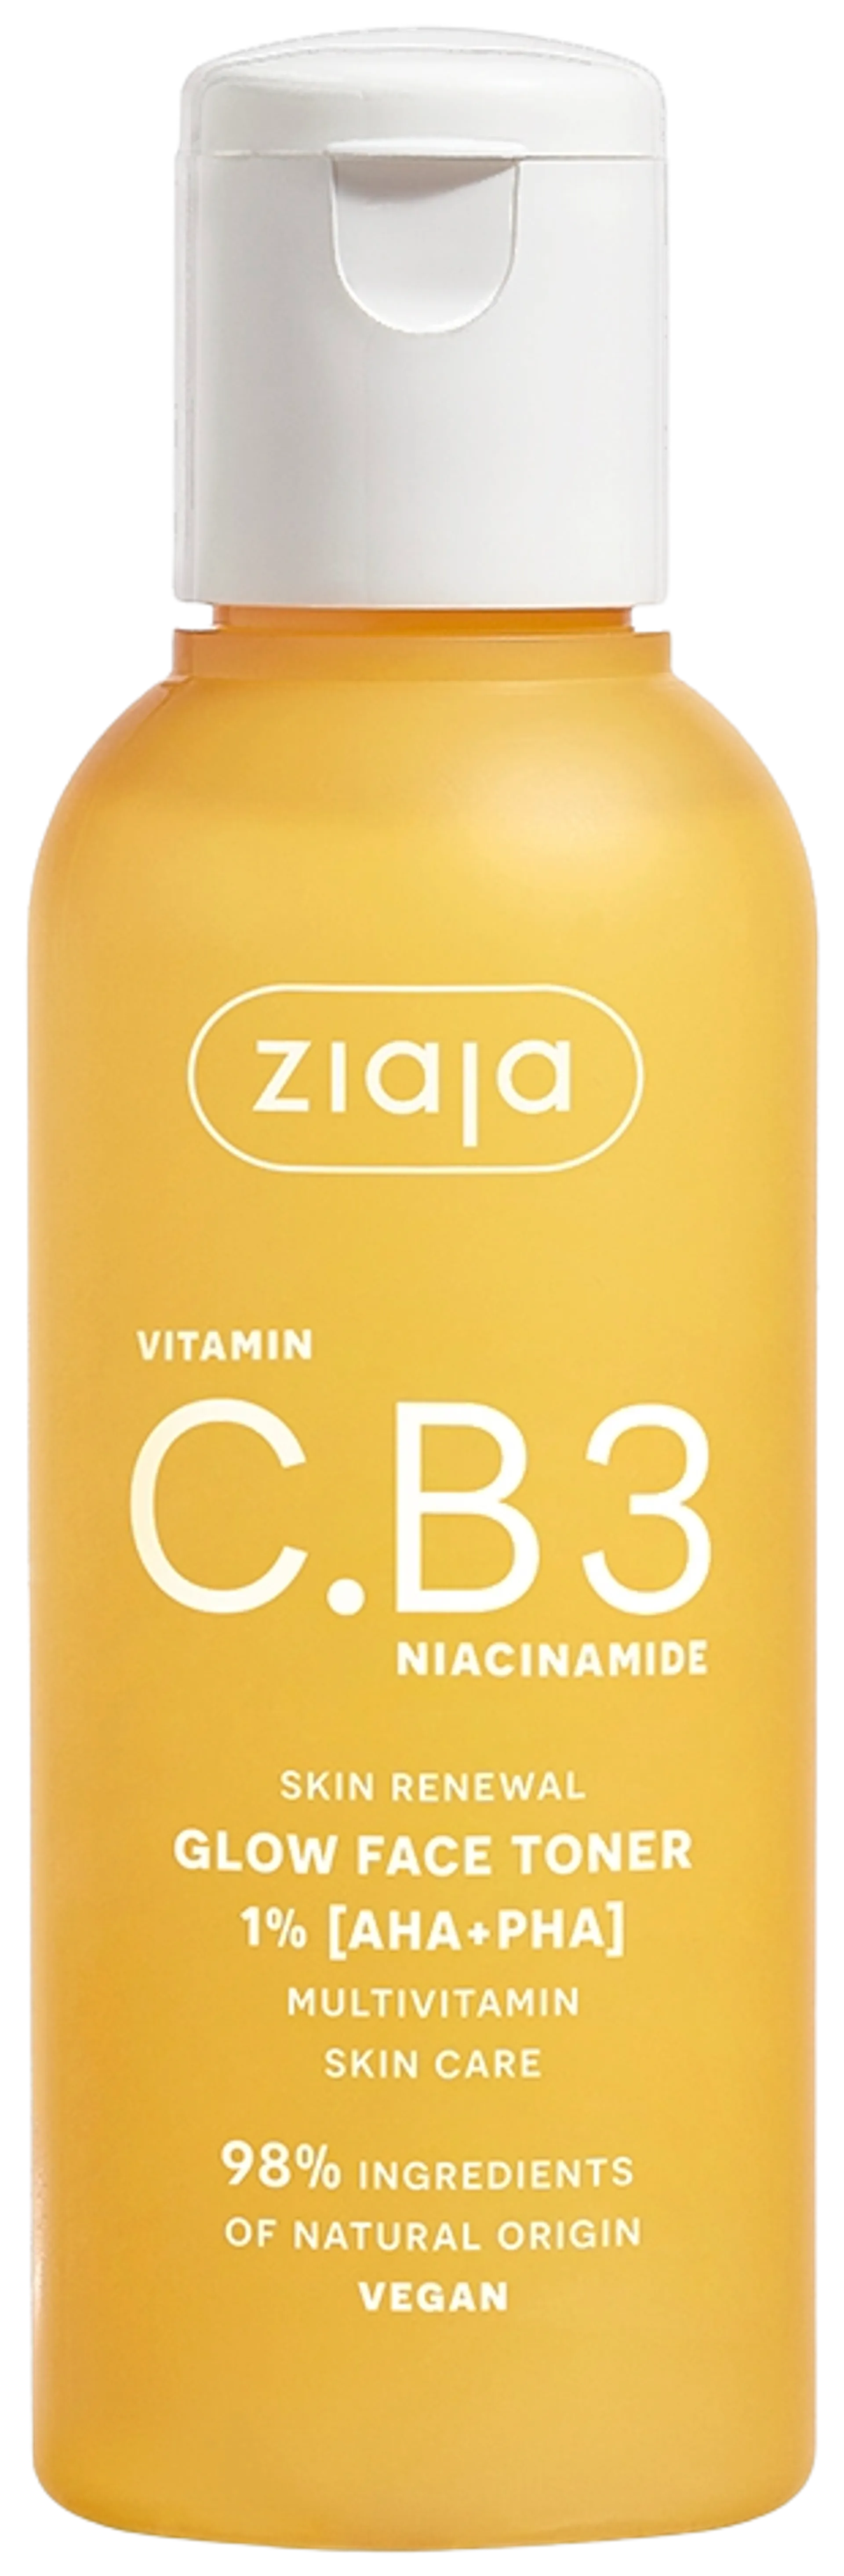 Ziaja C.B3 vitamiini 1 % AHA+PHA kasvovesi 120 ml